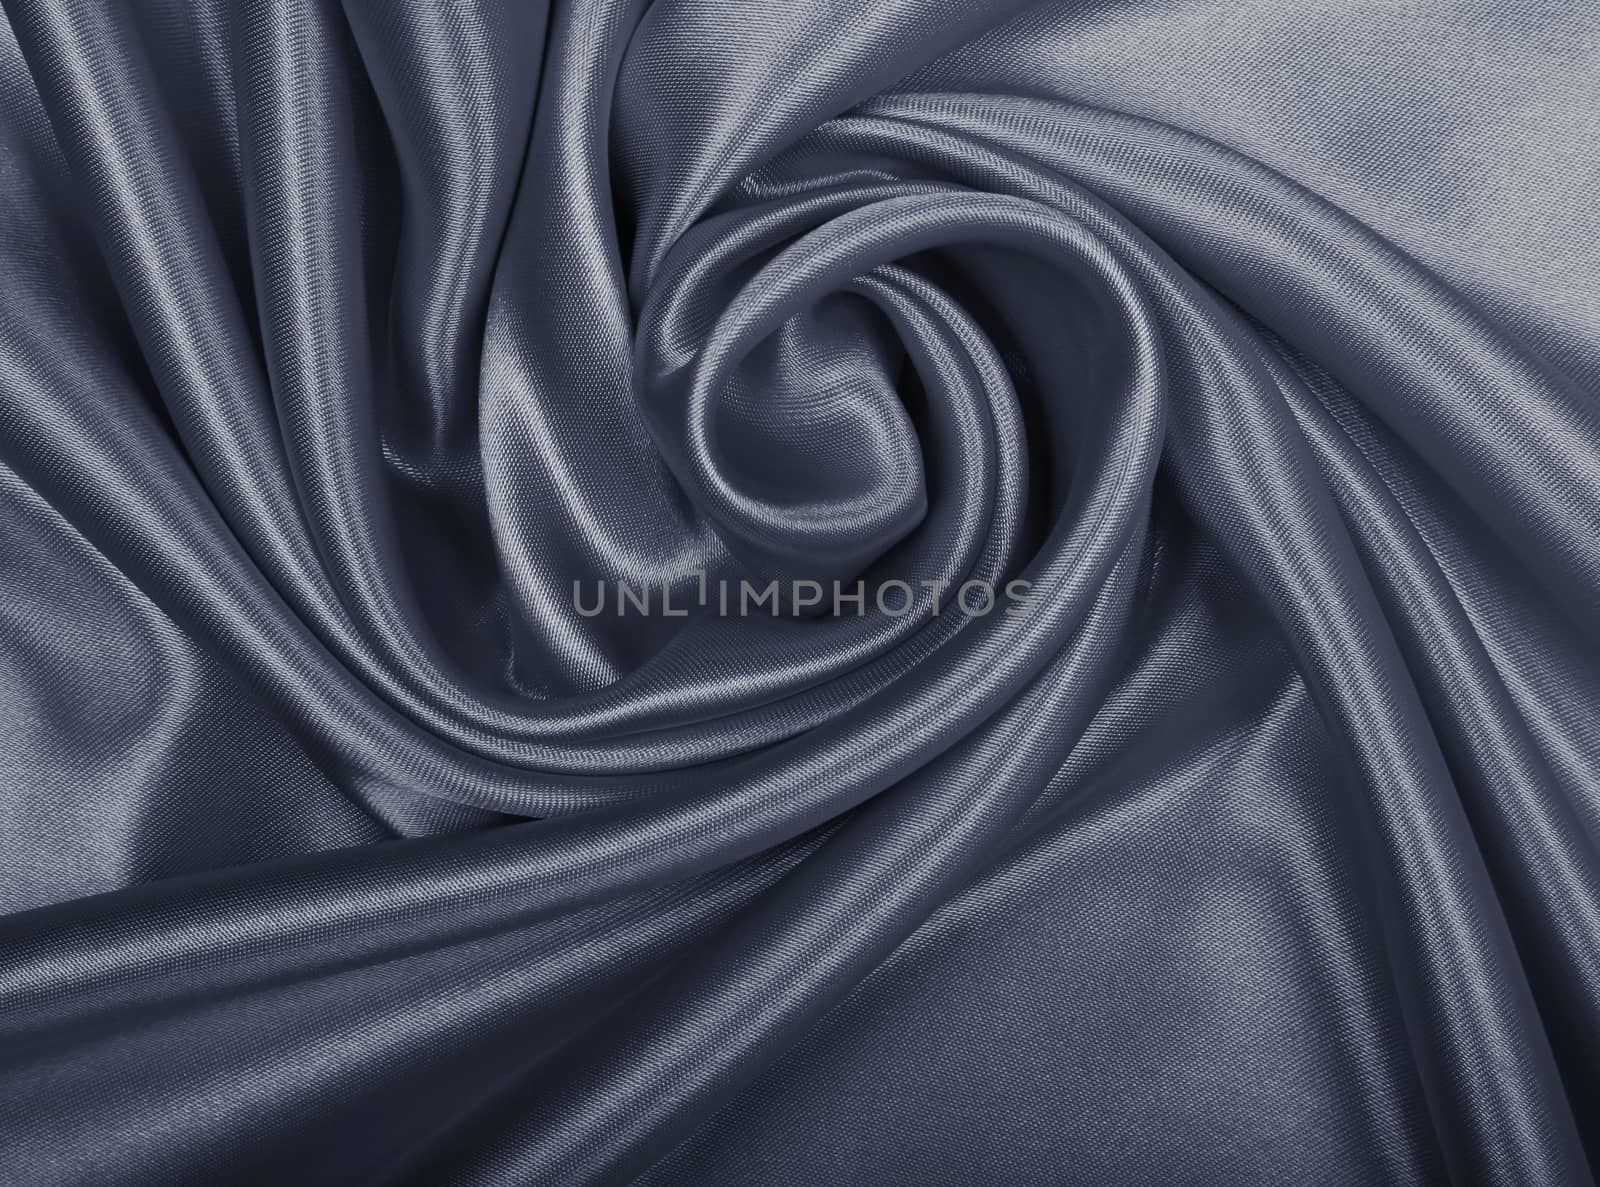 Smooth elegant grey silk or satin as background  by oxanatravel